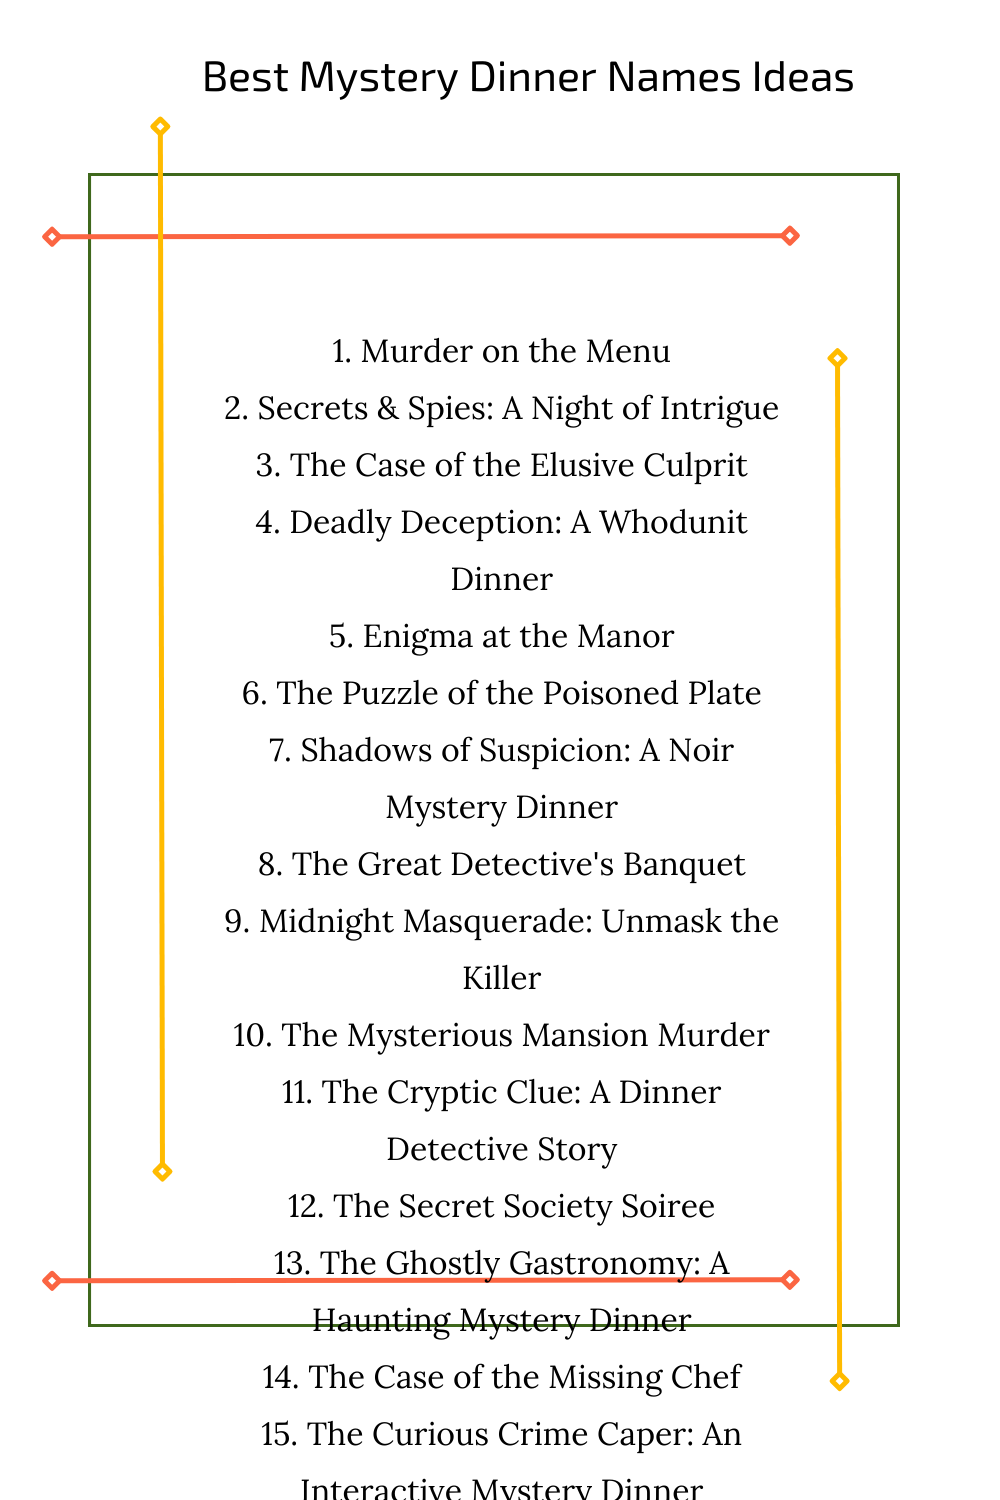 Best Mystery Dinner Names Ideas